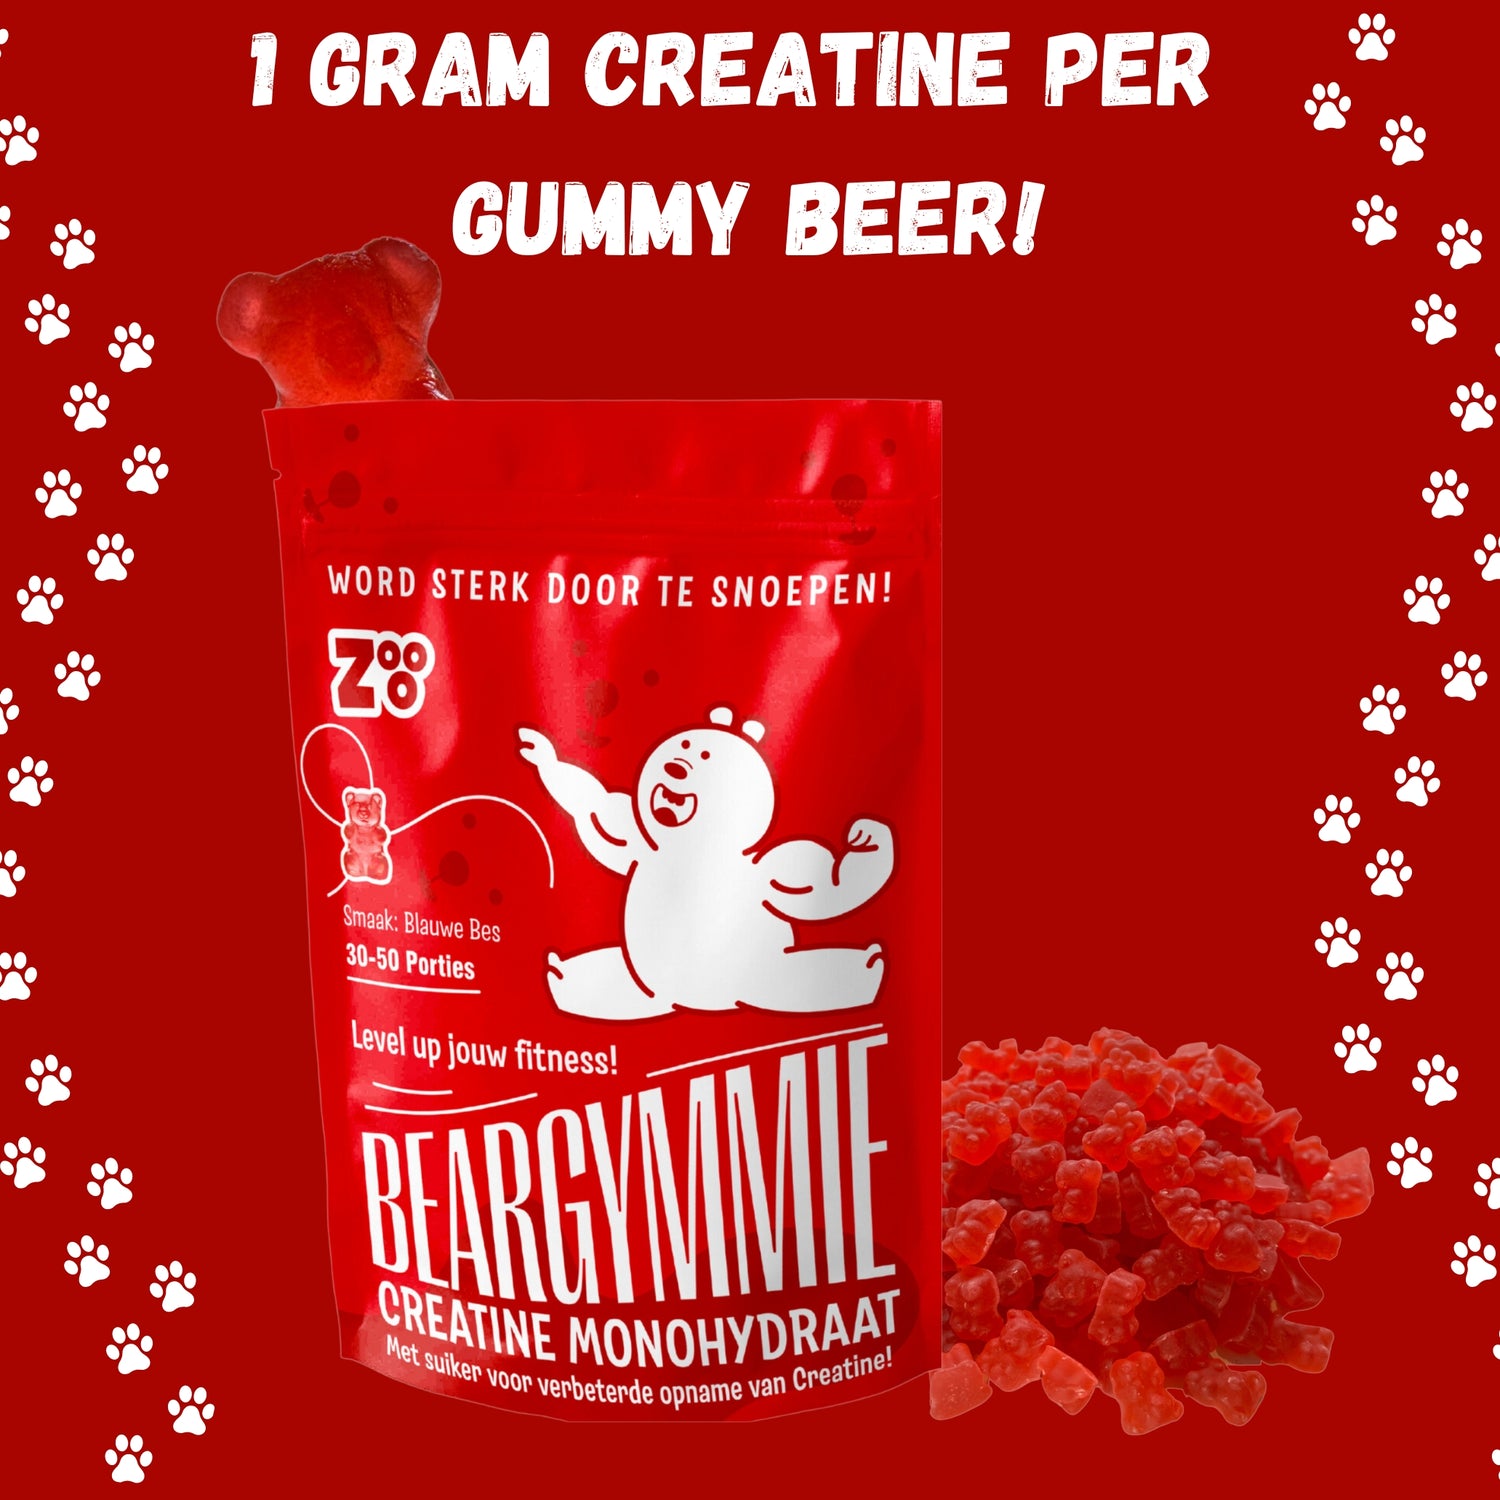 Foto van Beargymmies van Zooo Nutrition welke 1 gram creatine per gummie bevat.